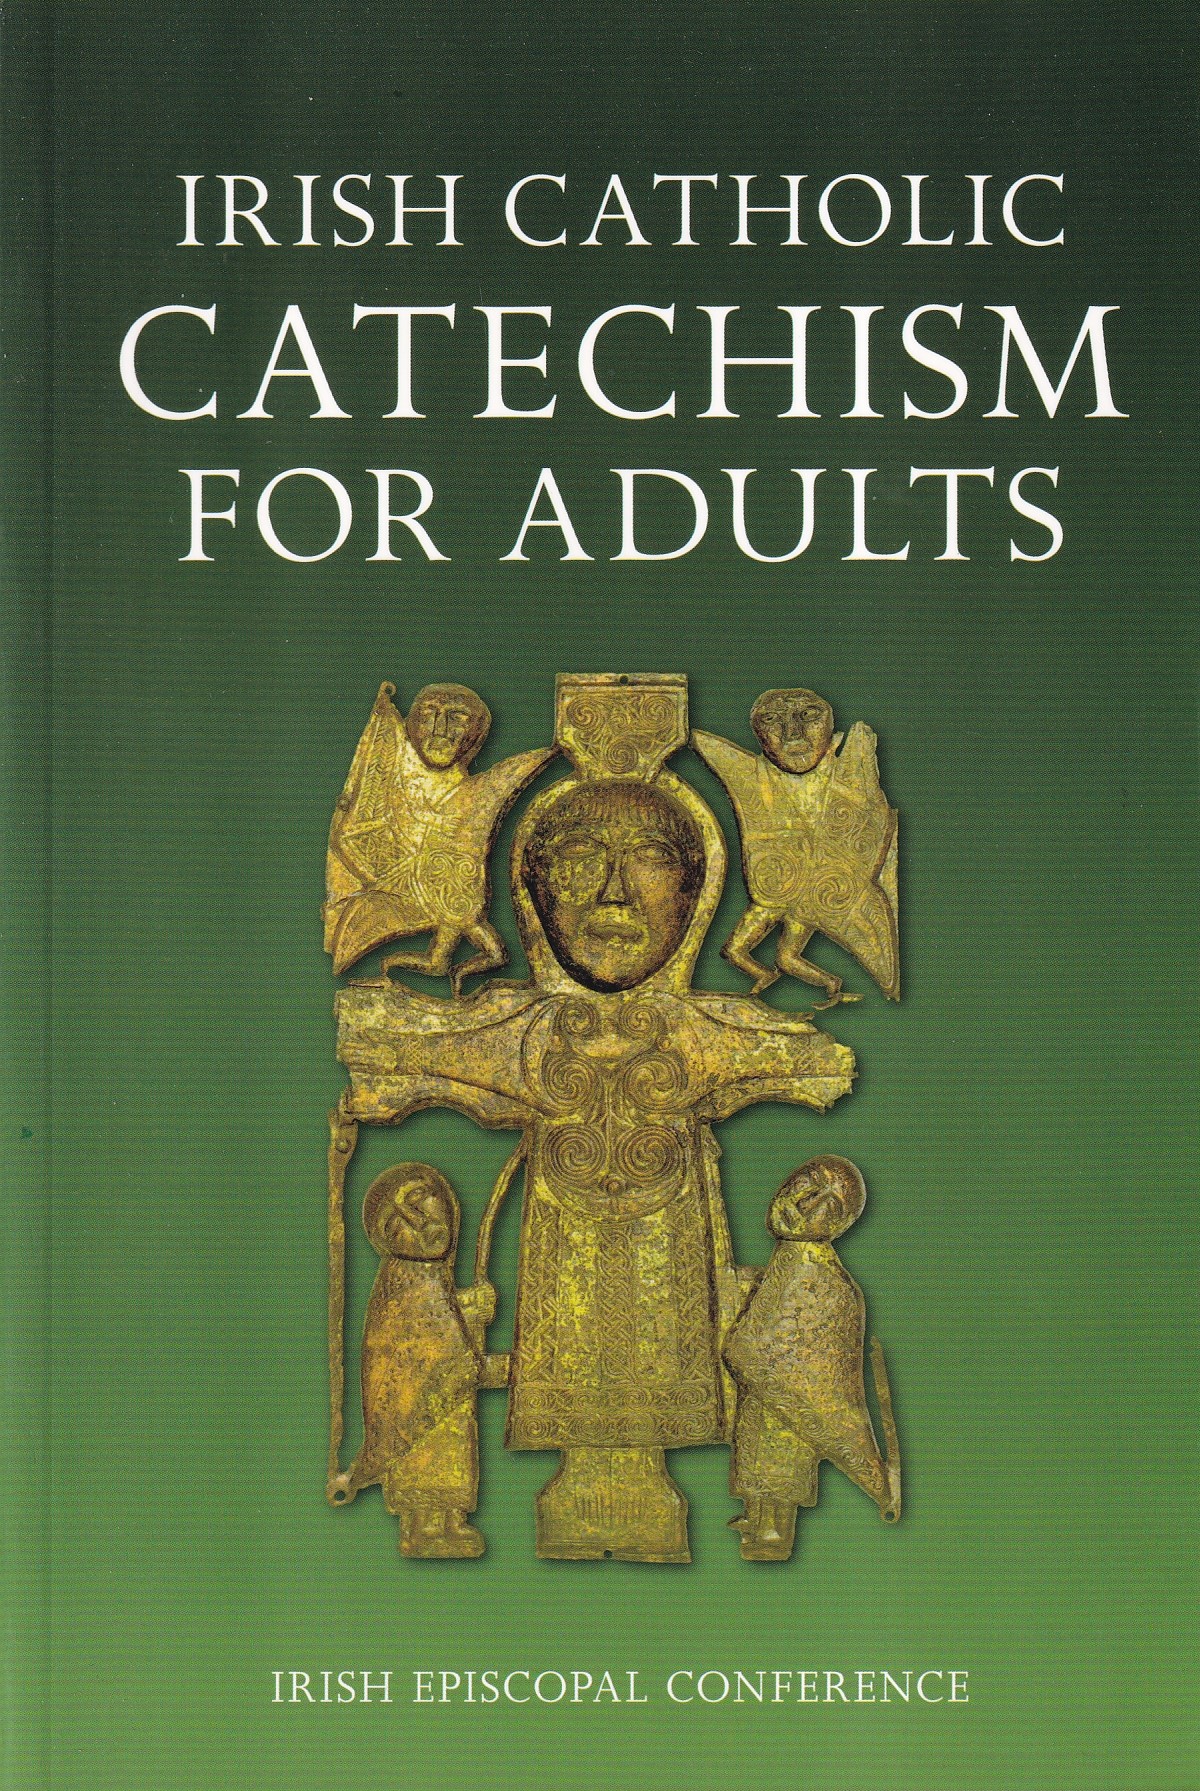 Irish Catholic Catechism for Adults | Irish Episcopal Conference | Charlie Byrne's